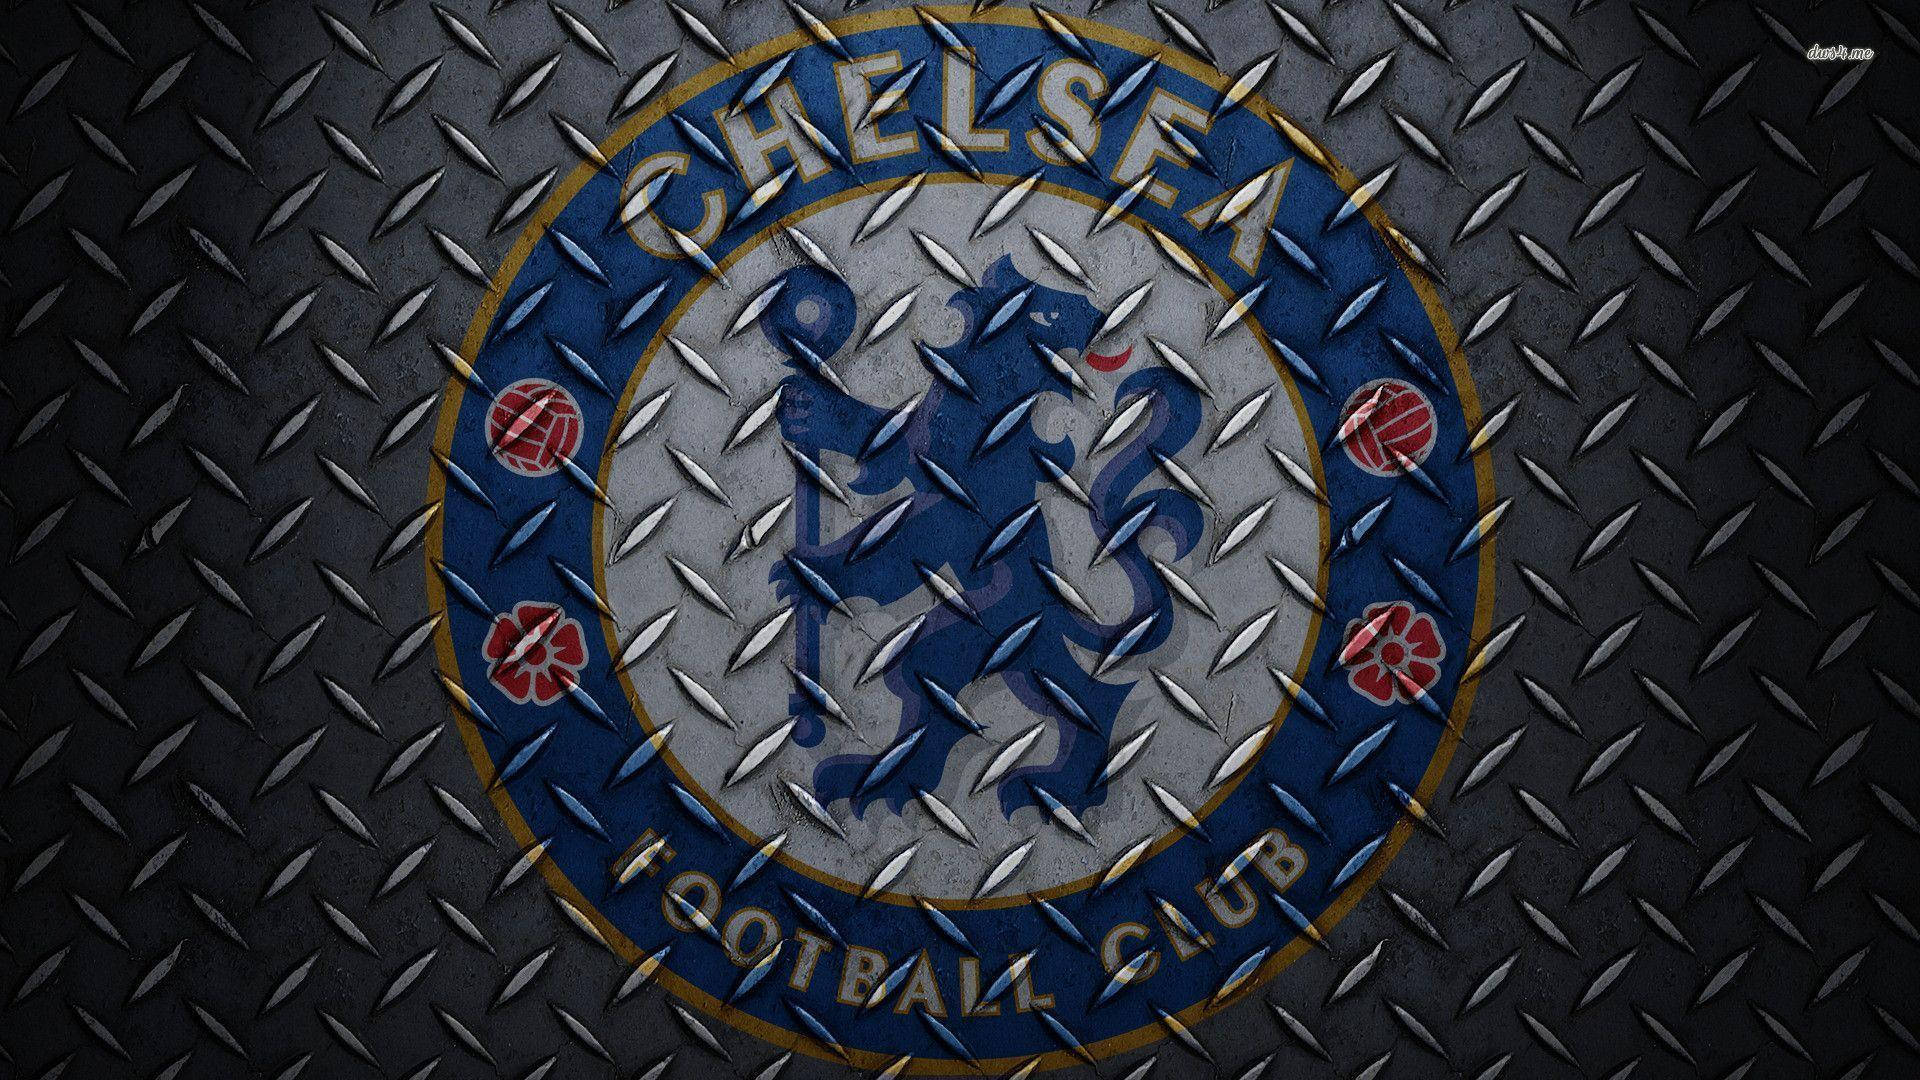 Chelsea Fc Logo Mit Metallischer Textur Wallpaper